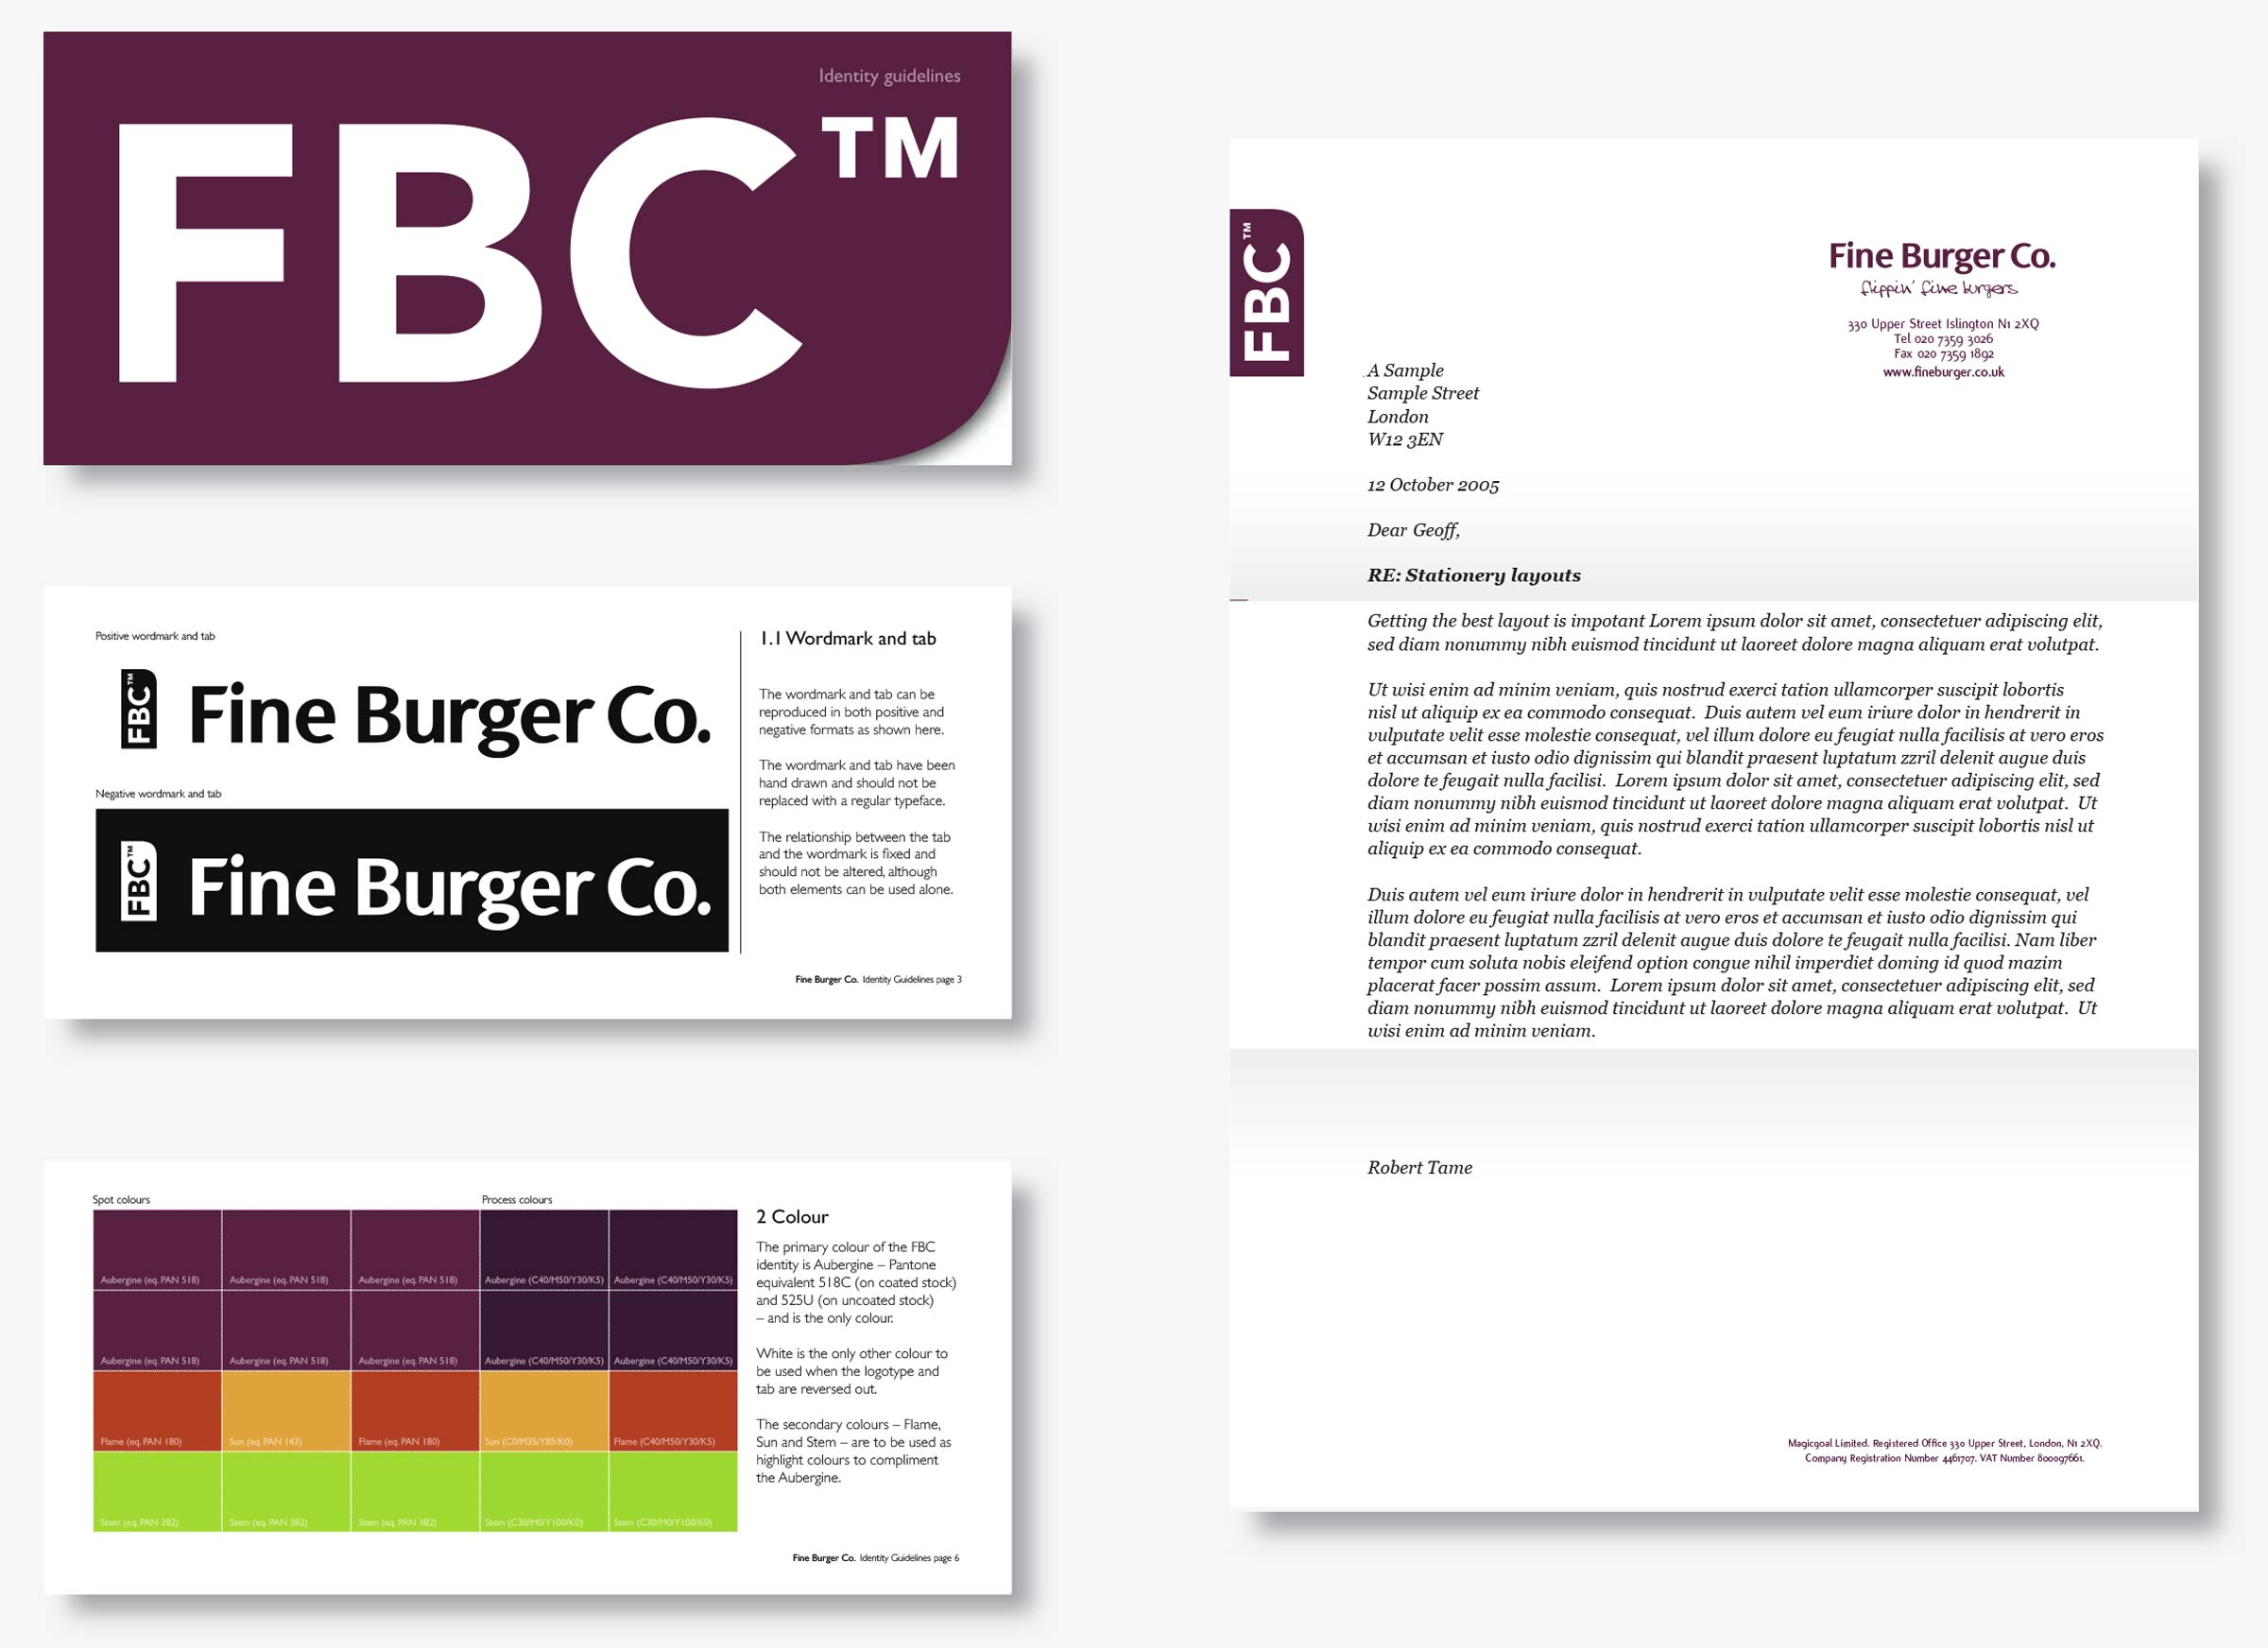 Fine Burger Co. brand guidelines